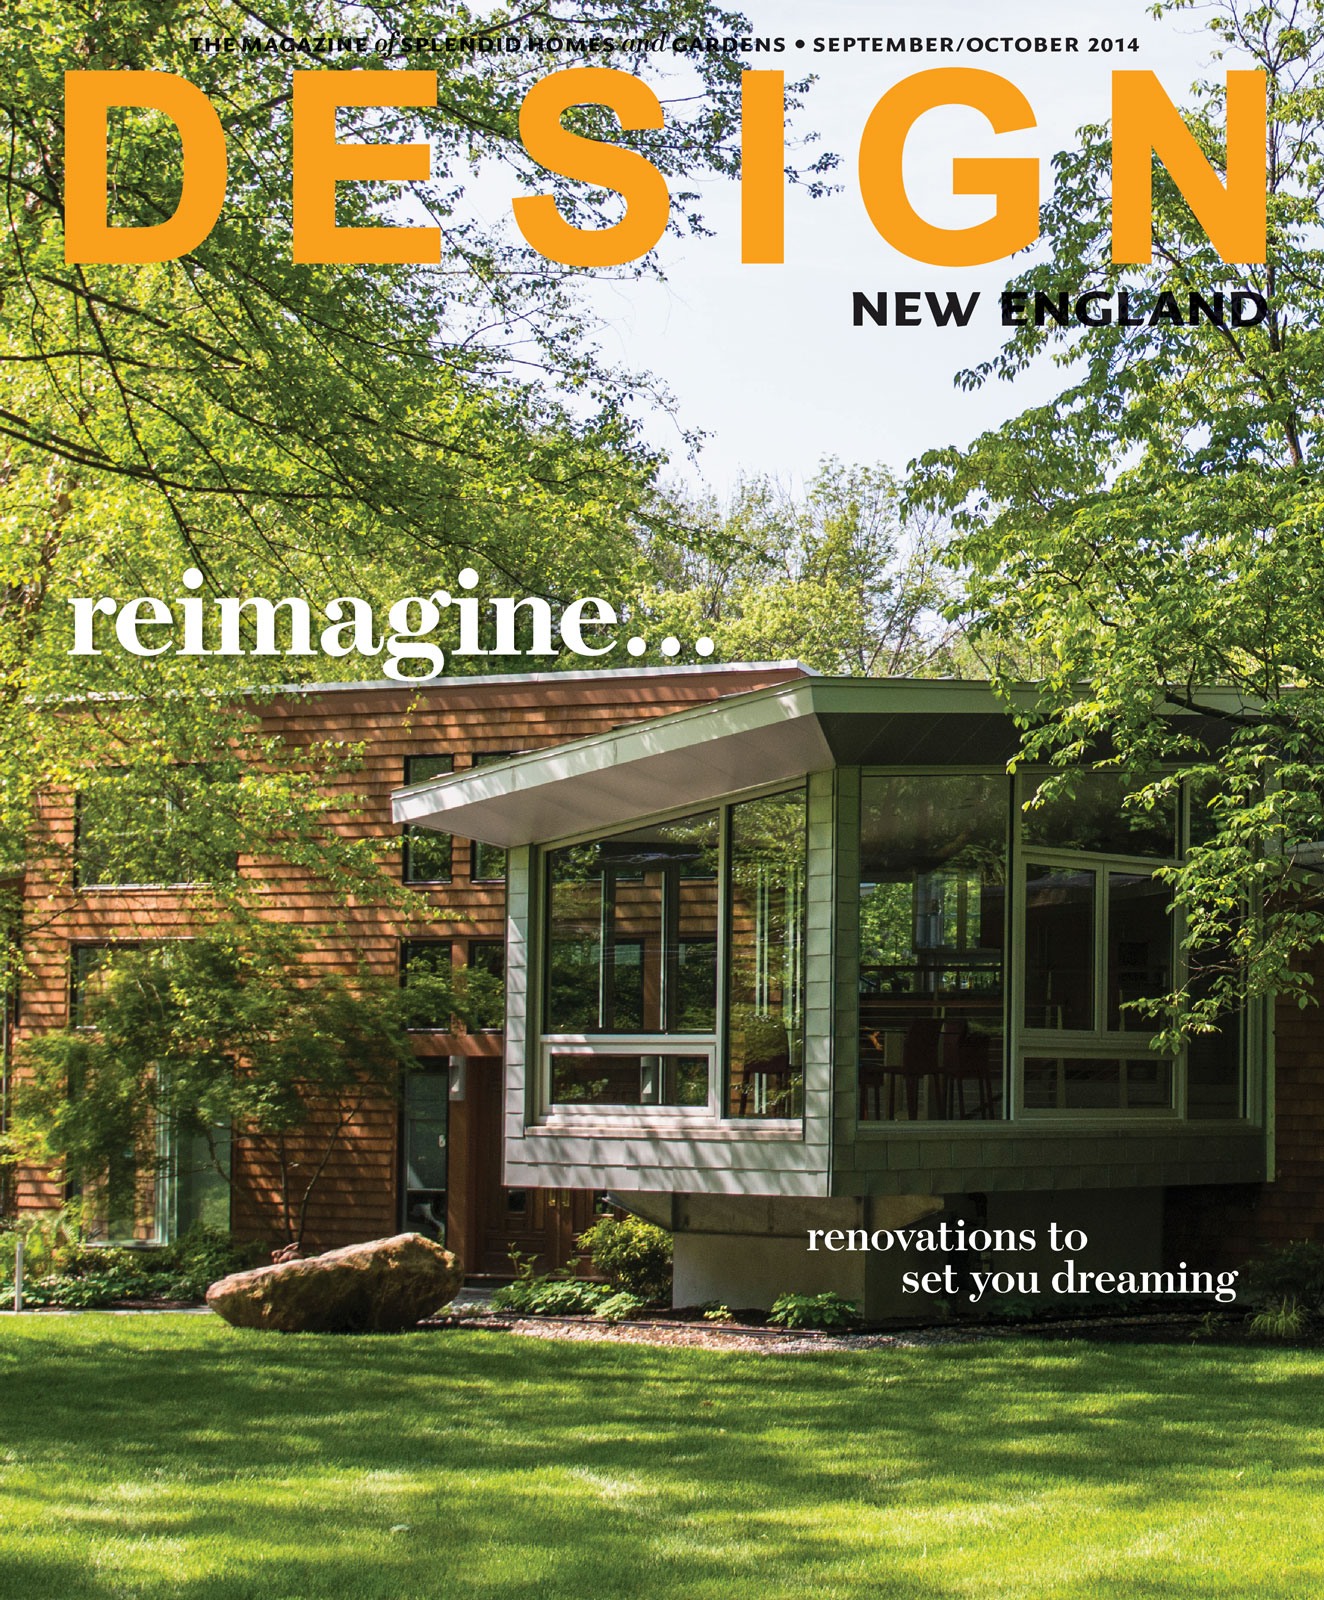 Design New England, Renovations to Set You Dreaming - September-October 2014.